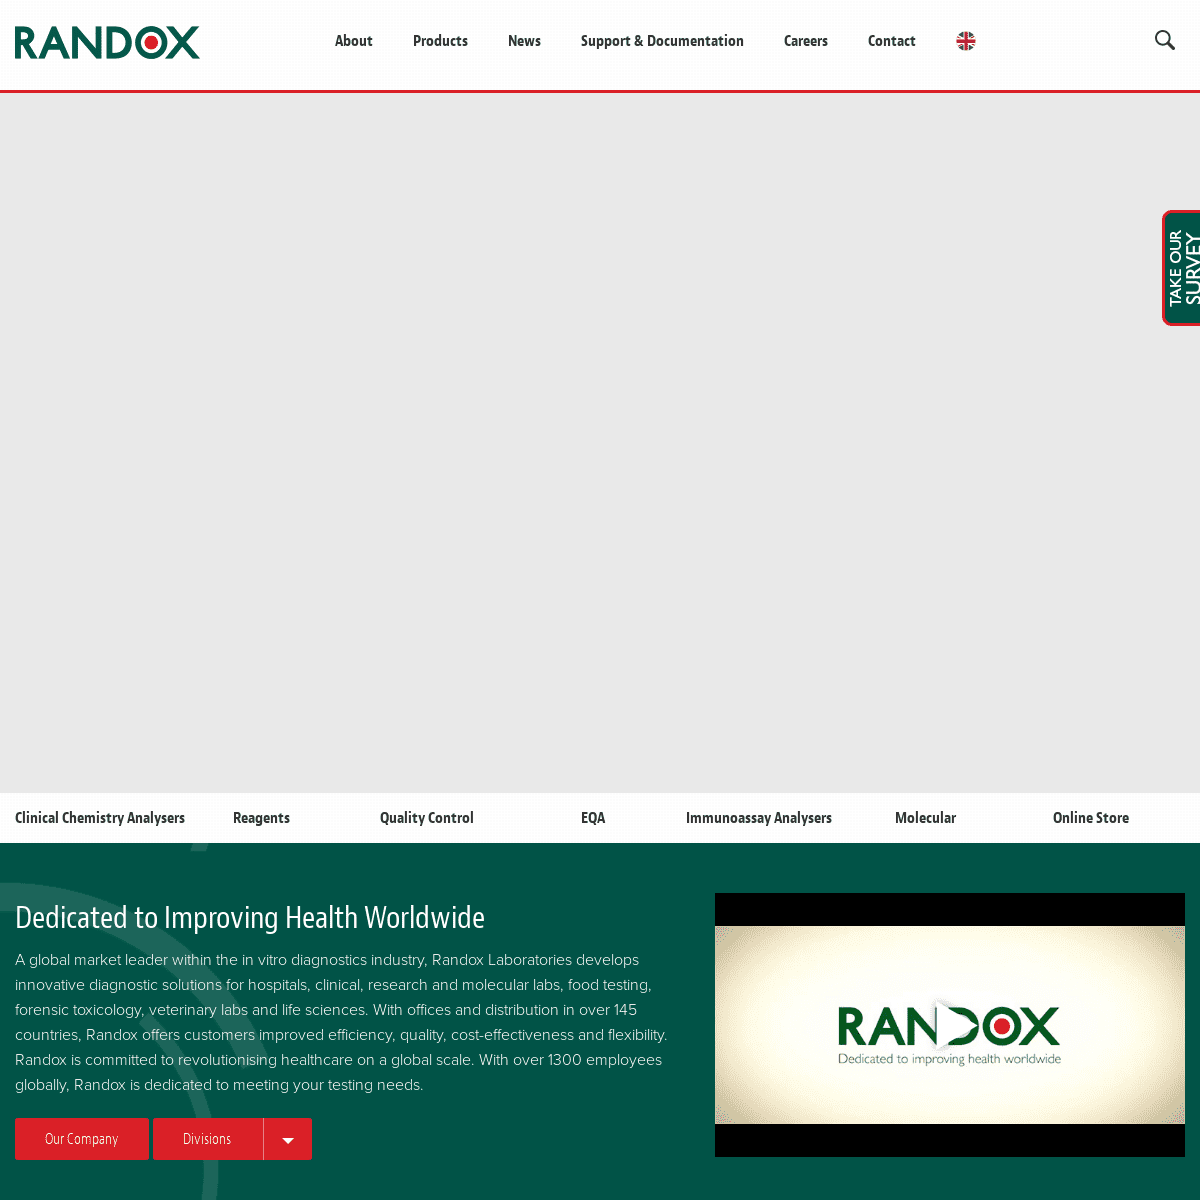 A complete backup of randox.com